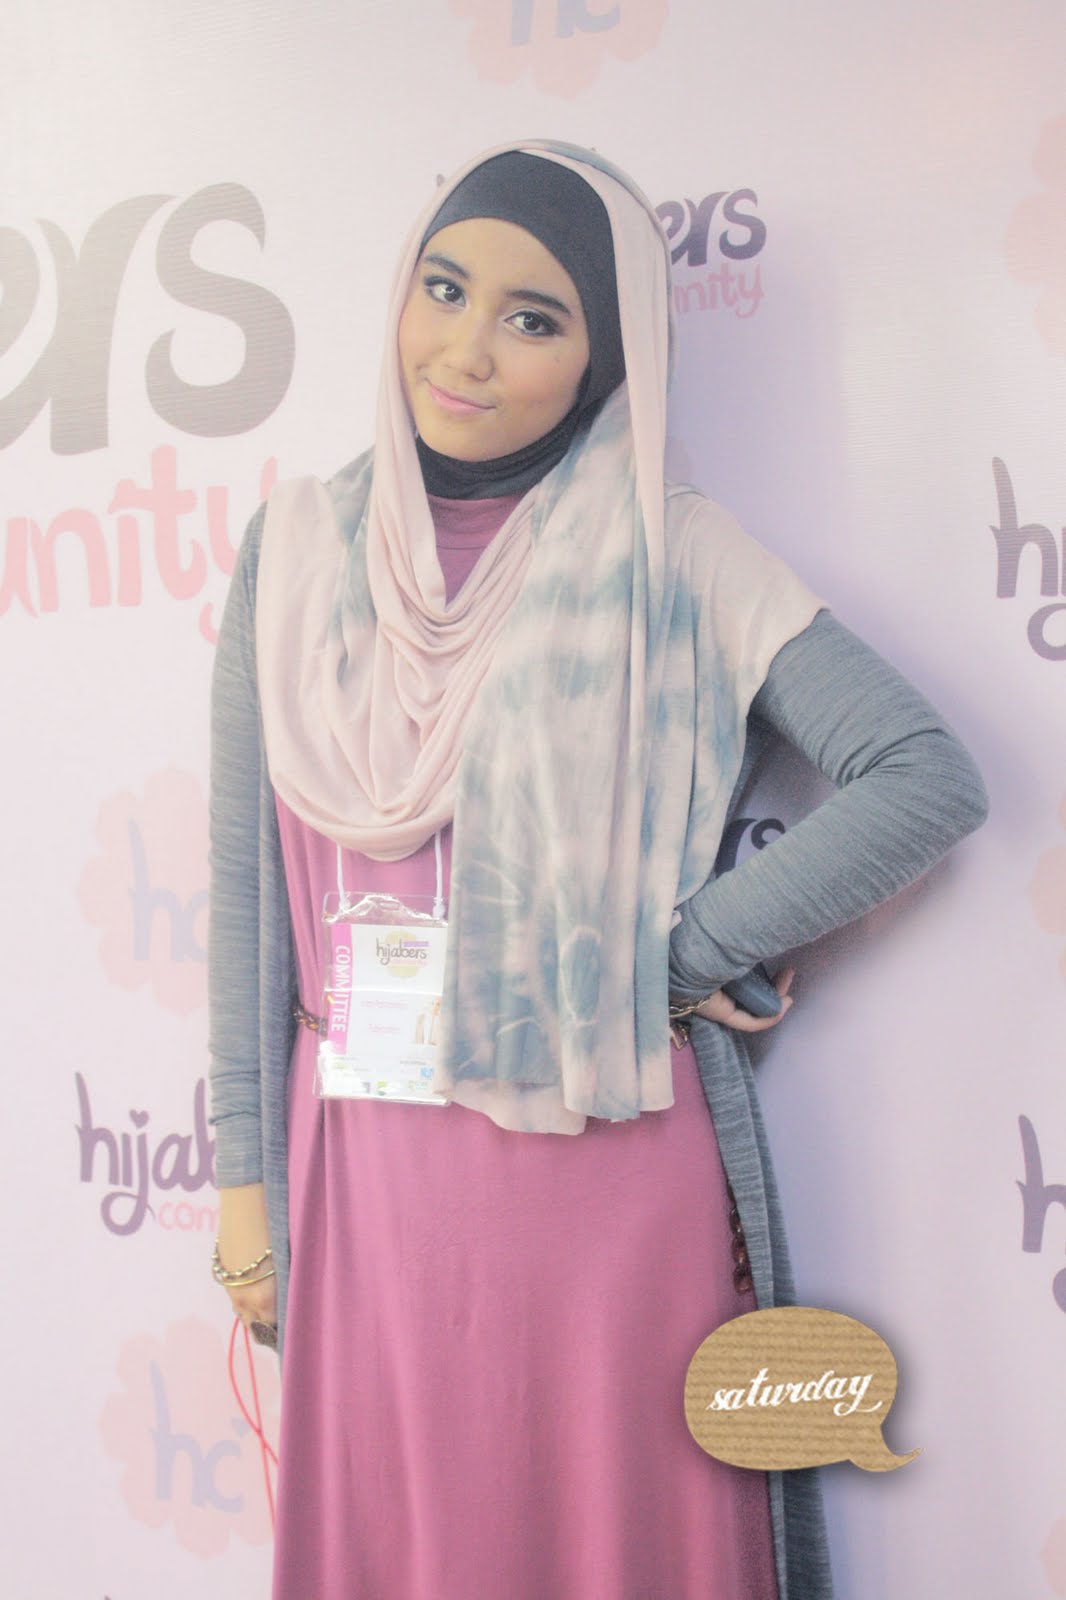 Hijabers Community Style